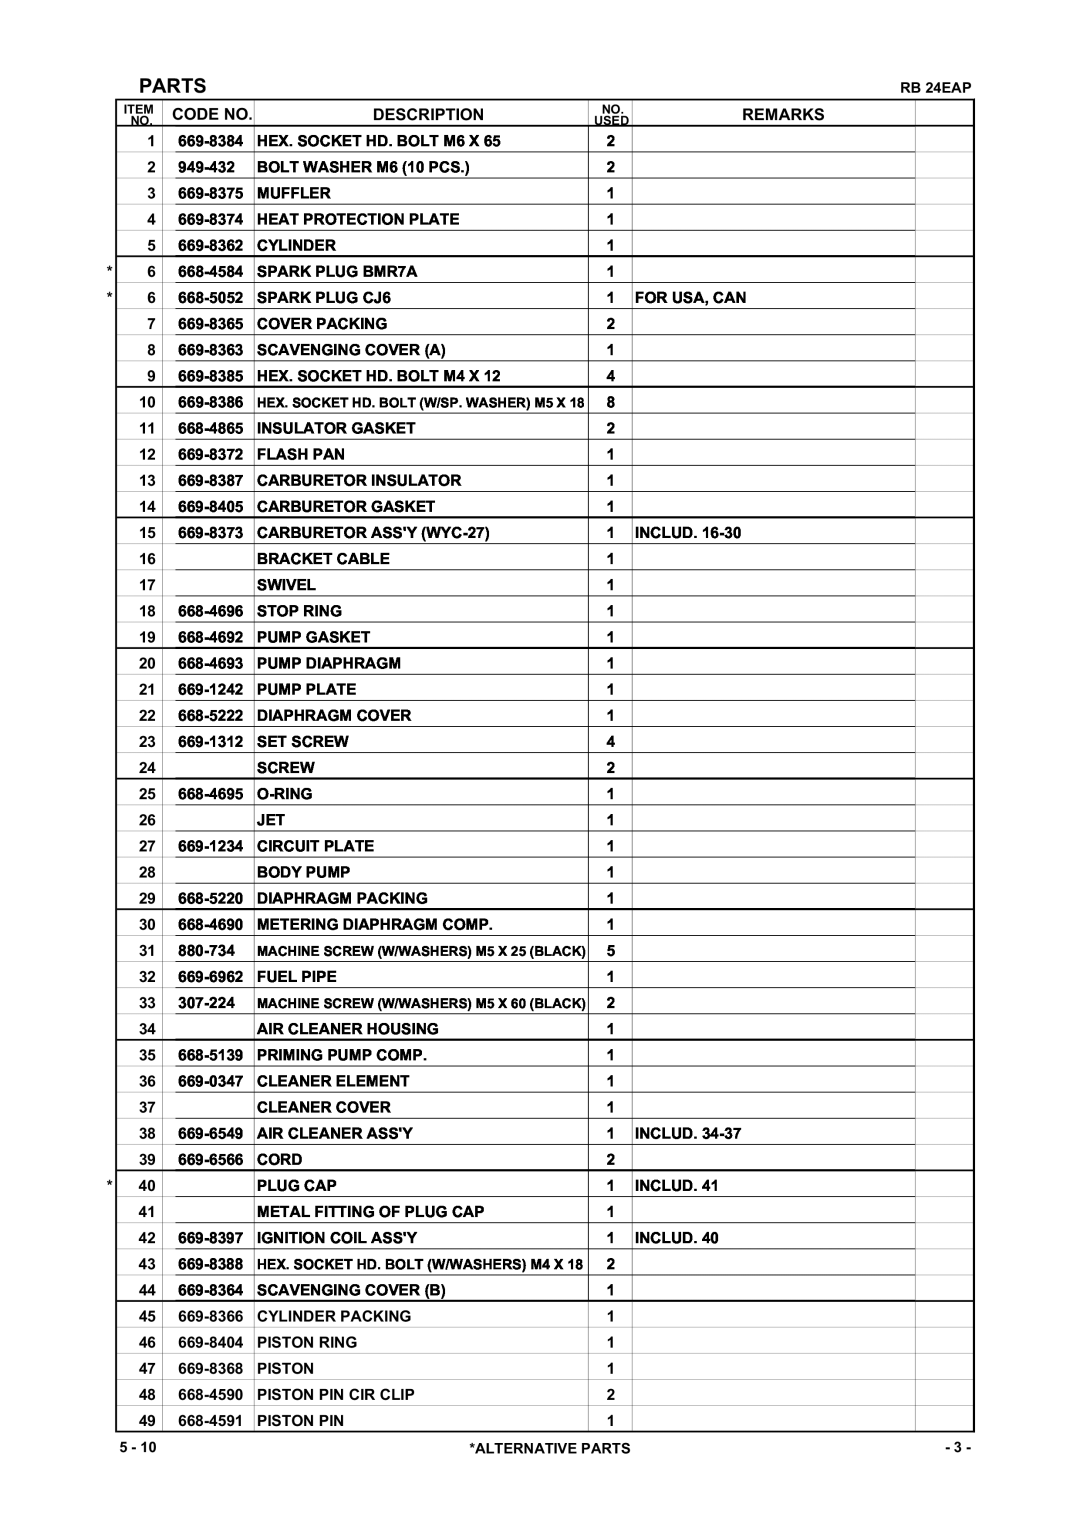 Hitachi RB 24EAP manual Parts, Code No, Description, Remarks 